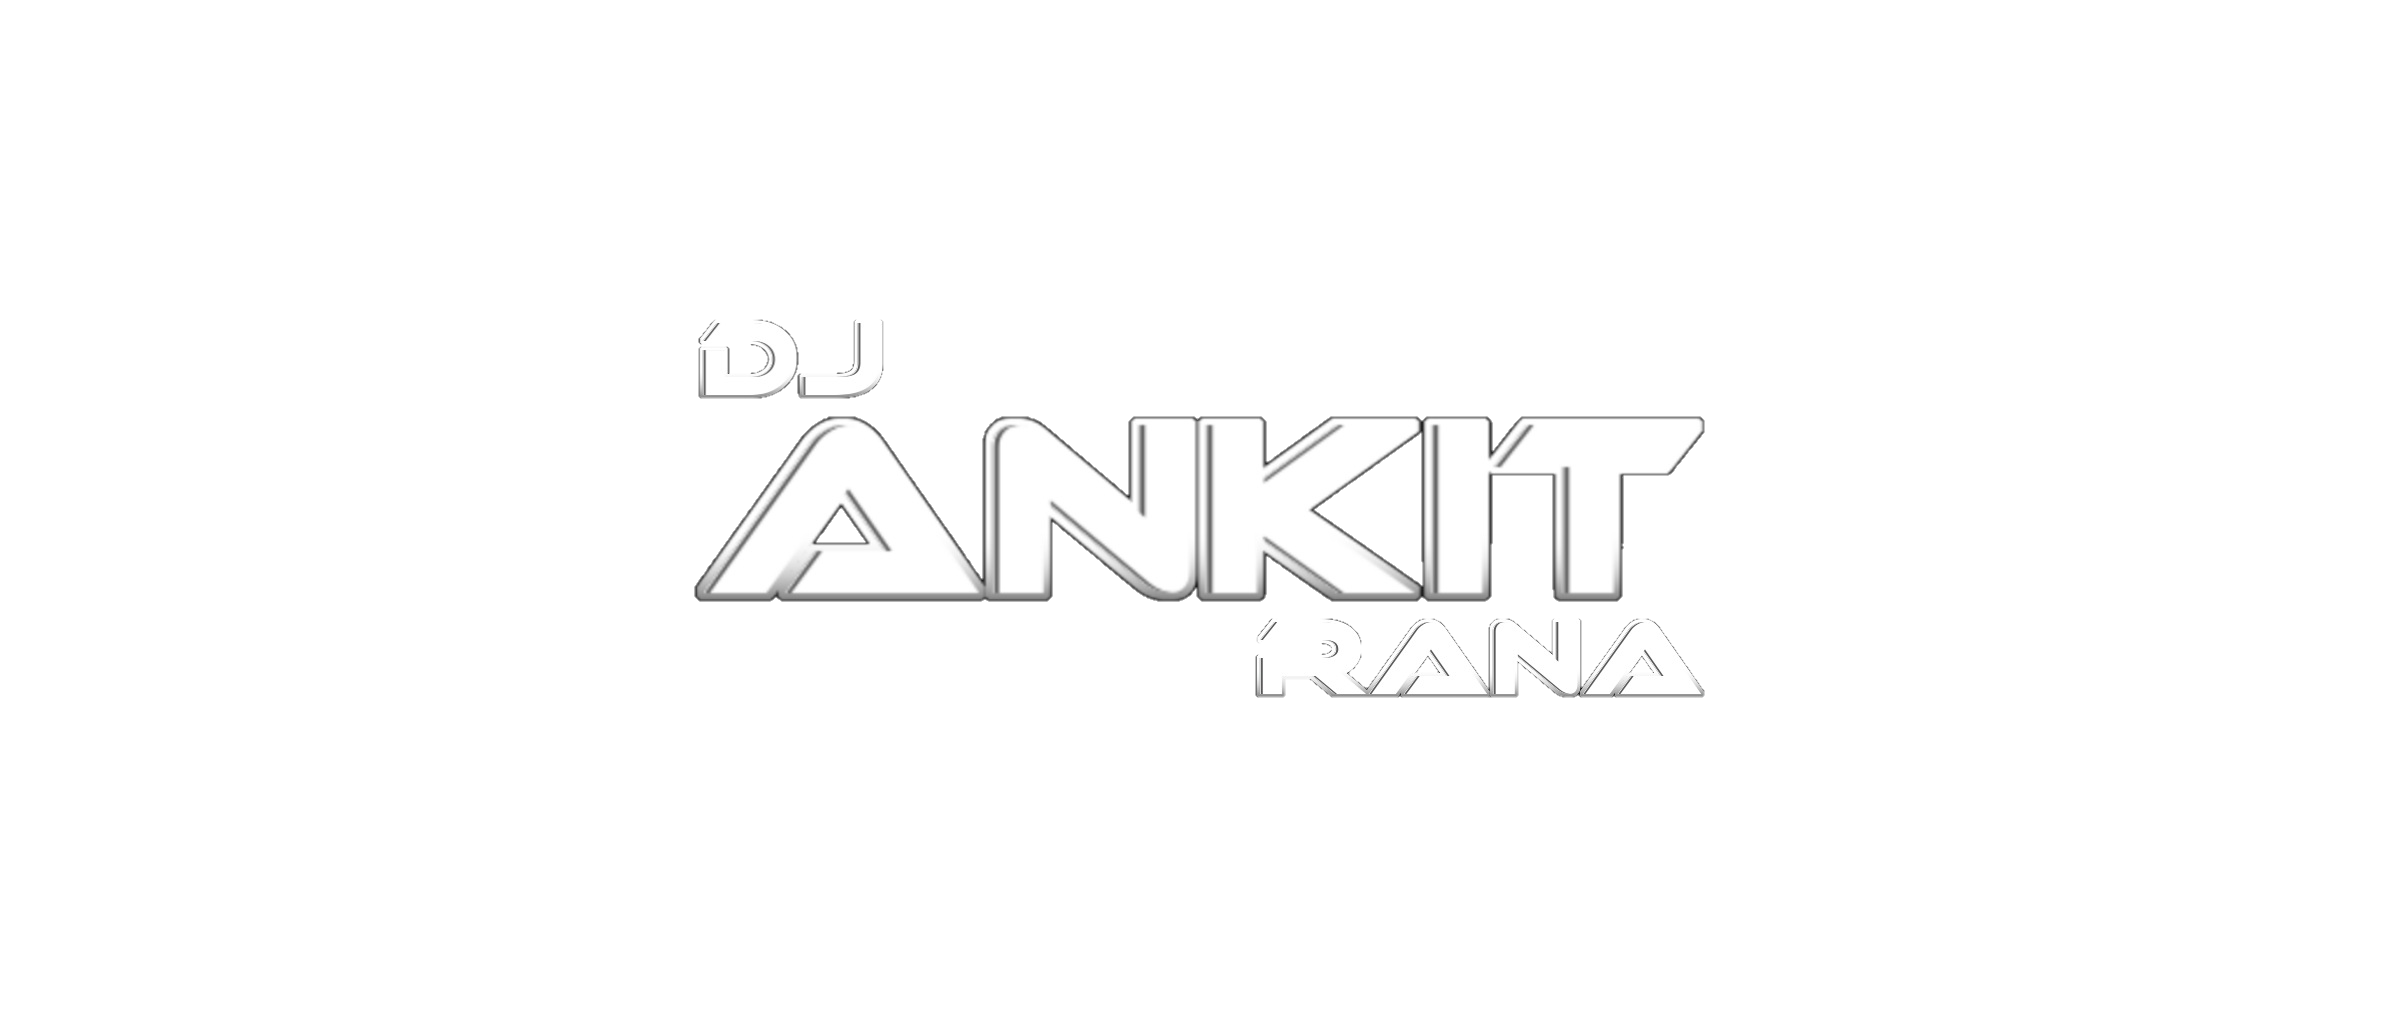 Kalaastar x Desi Kalakaar DJ Ankit Rana Mashup - Y DJ Ankit Rana Official 